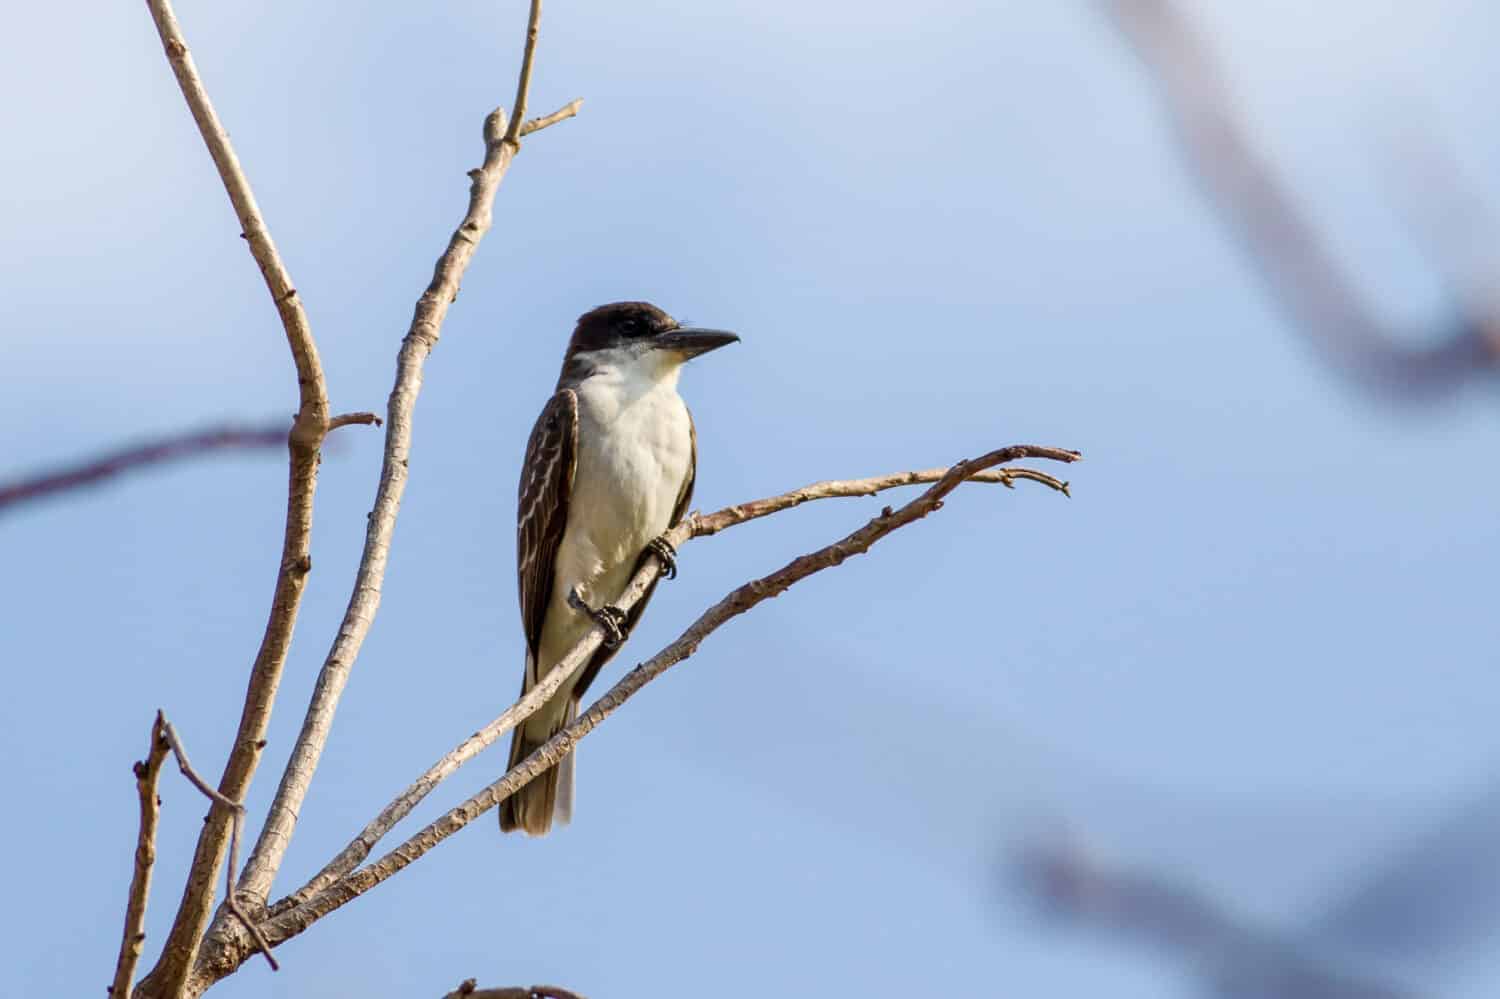 Giant Kingbird, Tyrannus cubensis, an endangered species now found only in Cuba